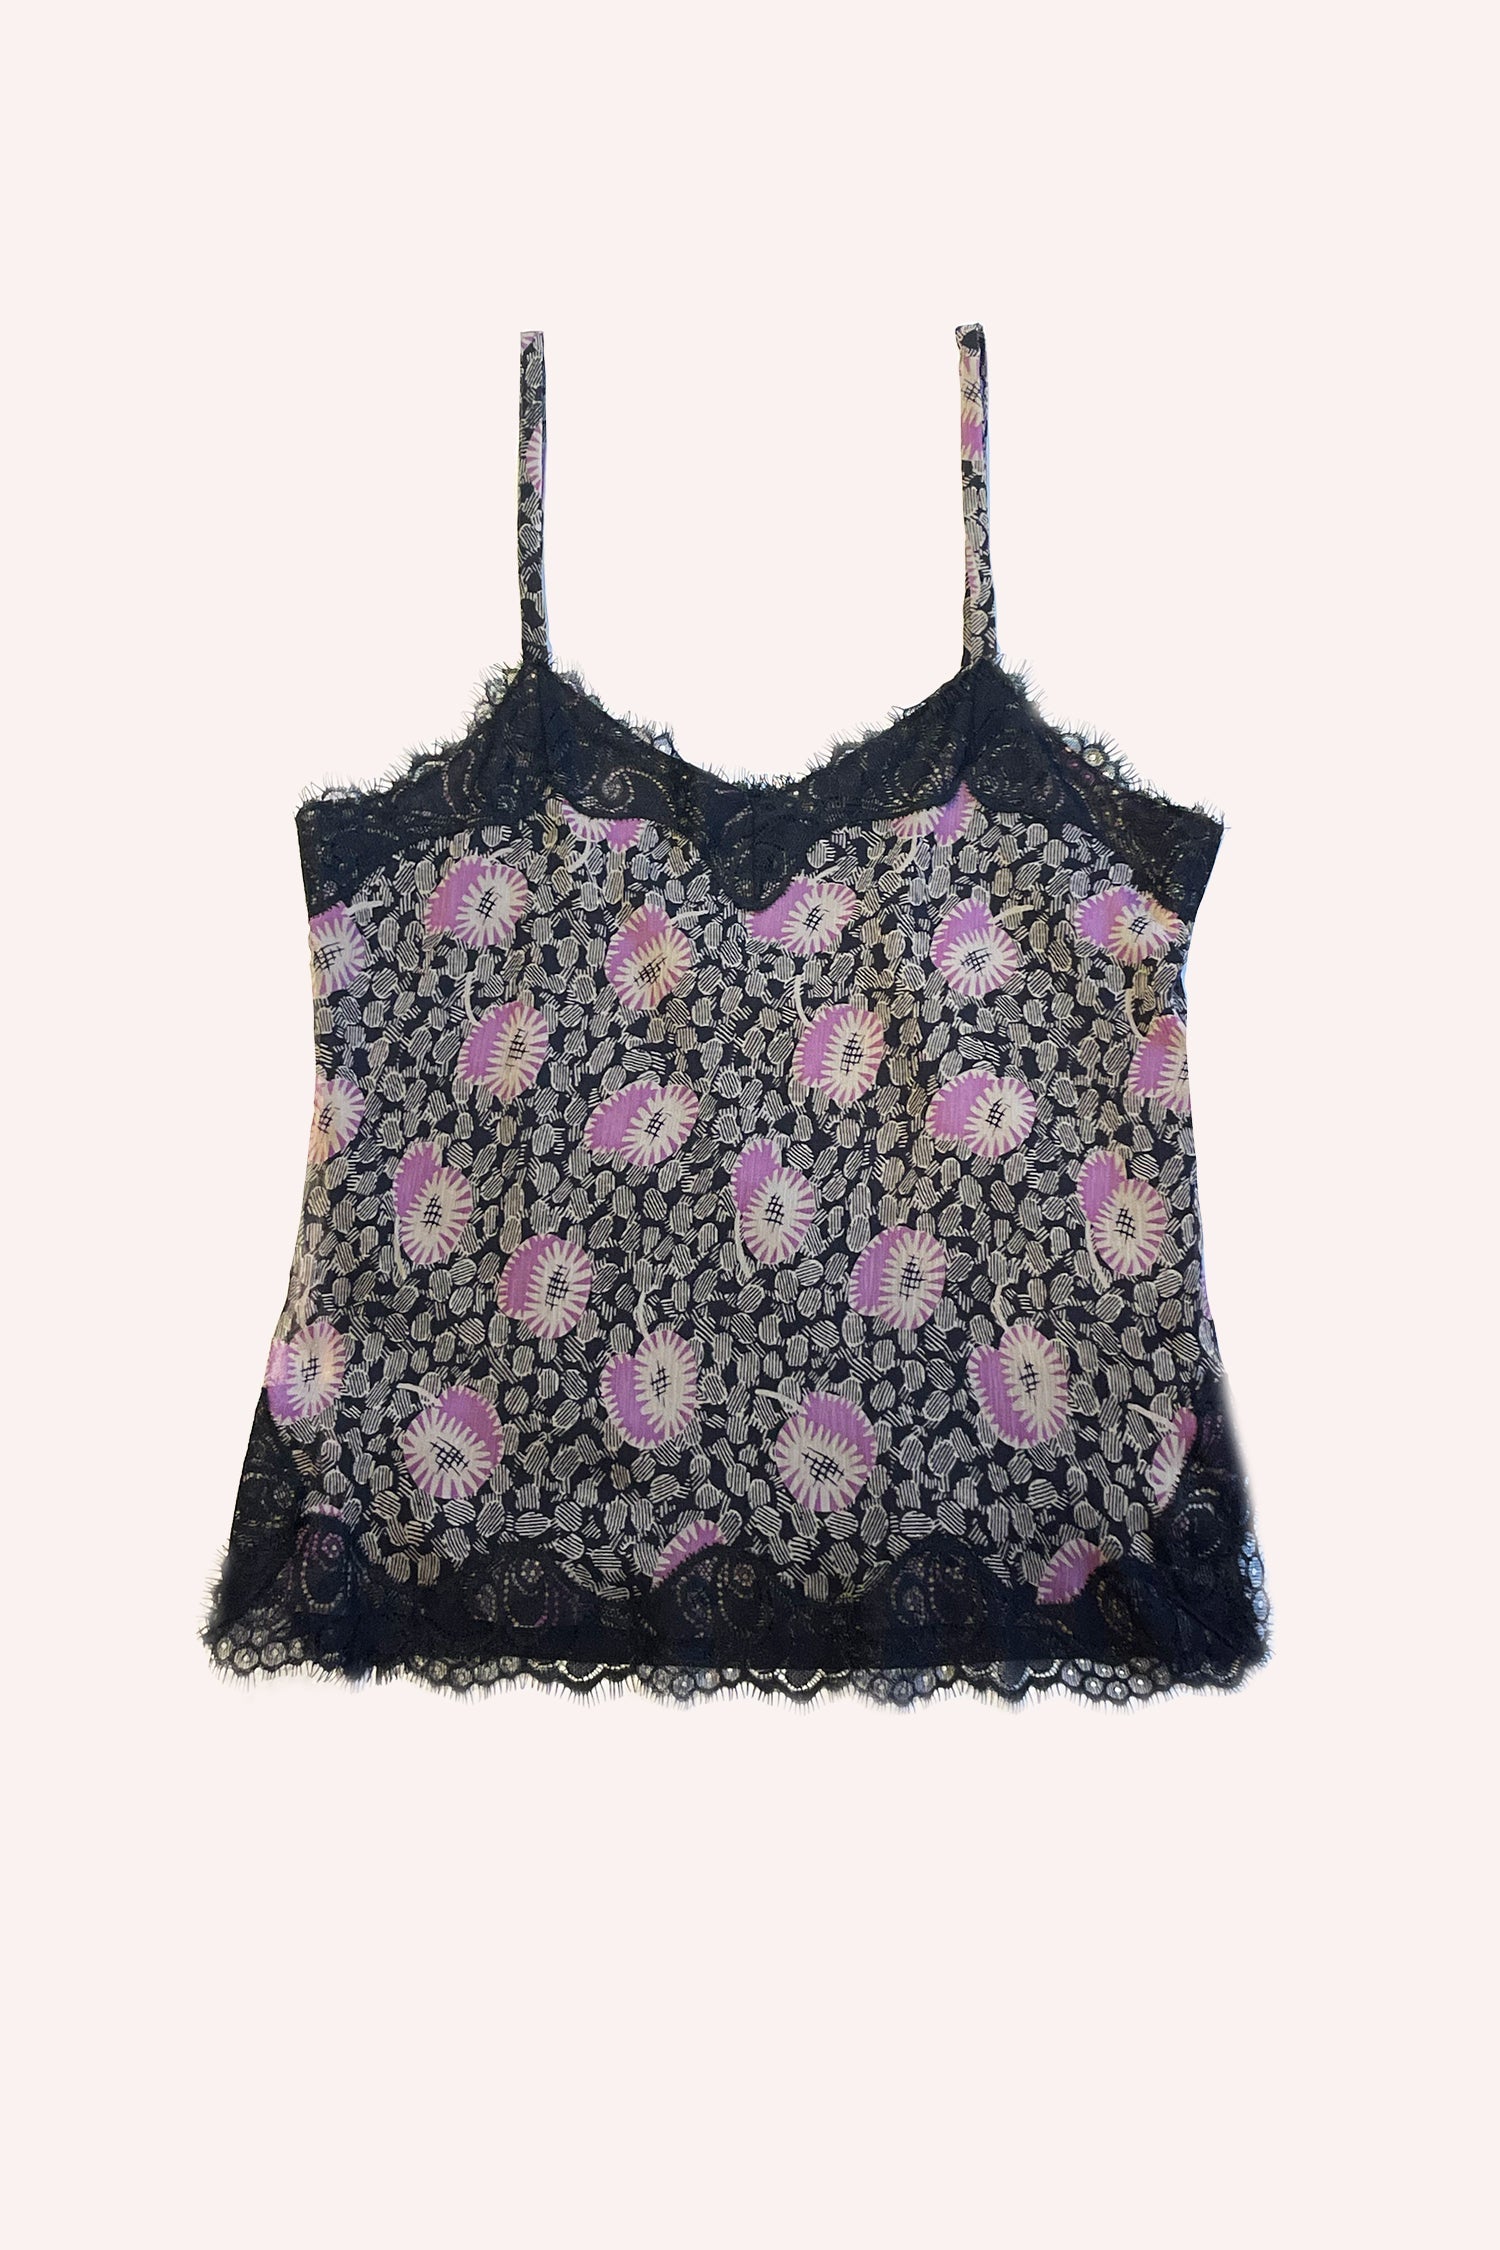 Black top, multicolored, sleeveless, floral pattern, 2-straps, V-neck, top & bottom black lace hems